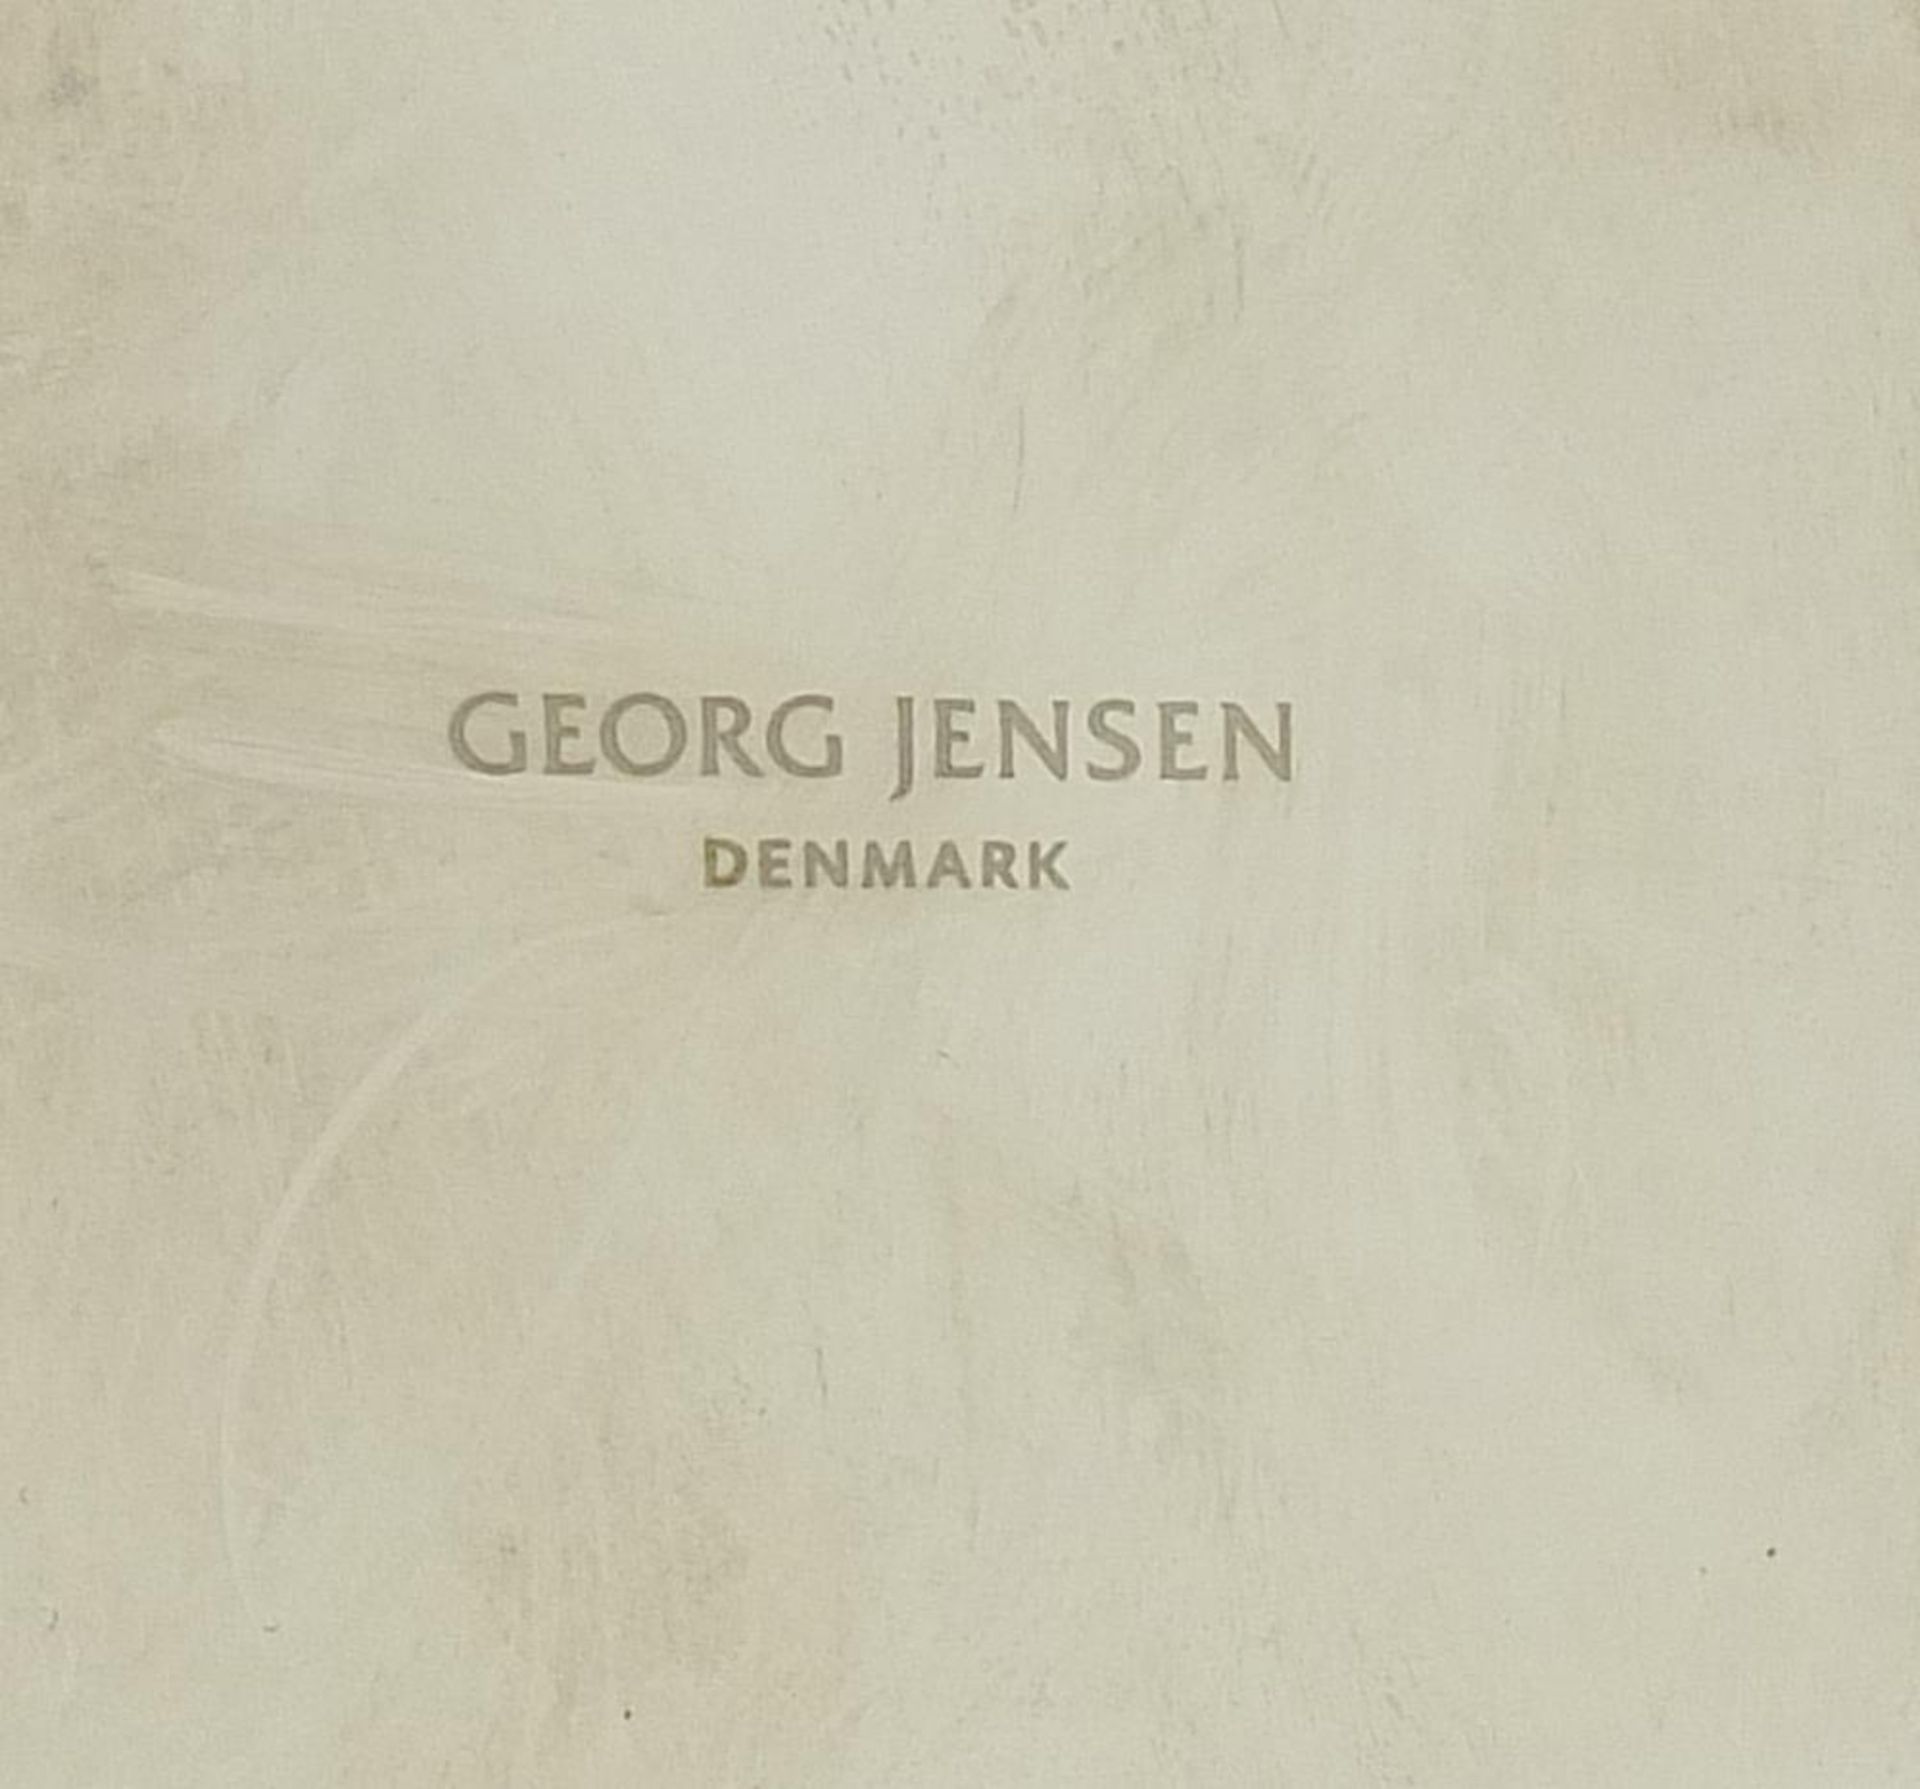 Georg Jensen, graduated set of three Danish candlesticks, the largest 24.5cm high - Image 4 of 4